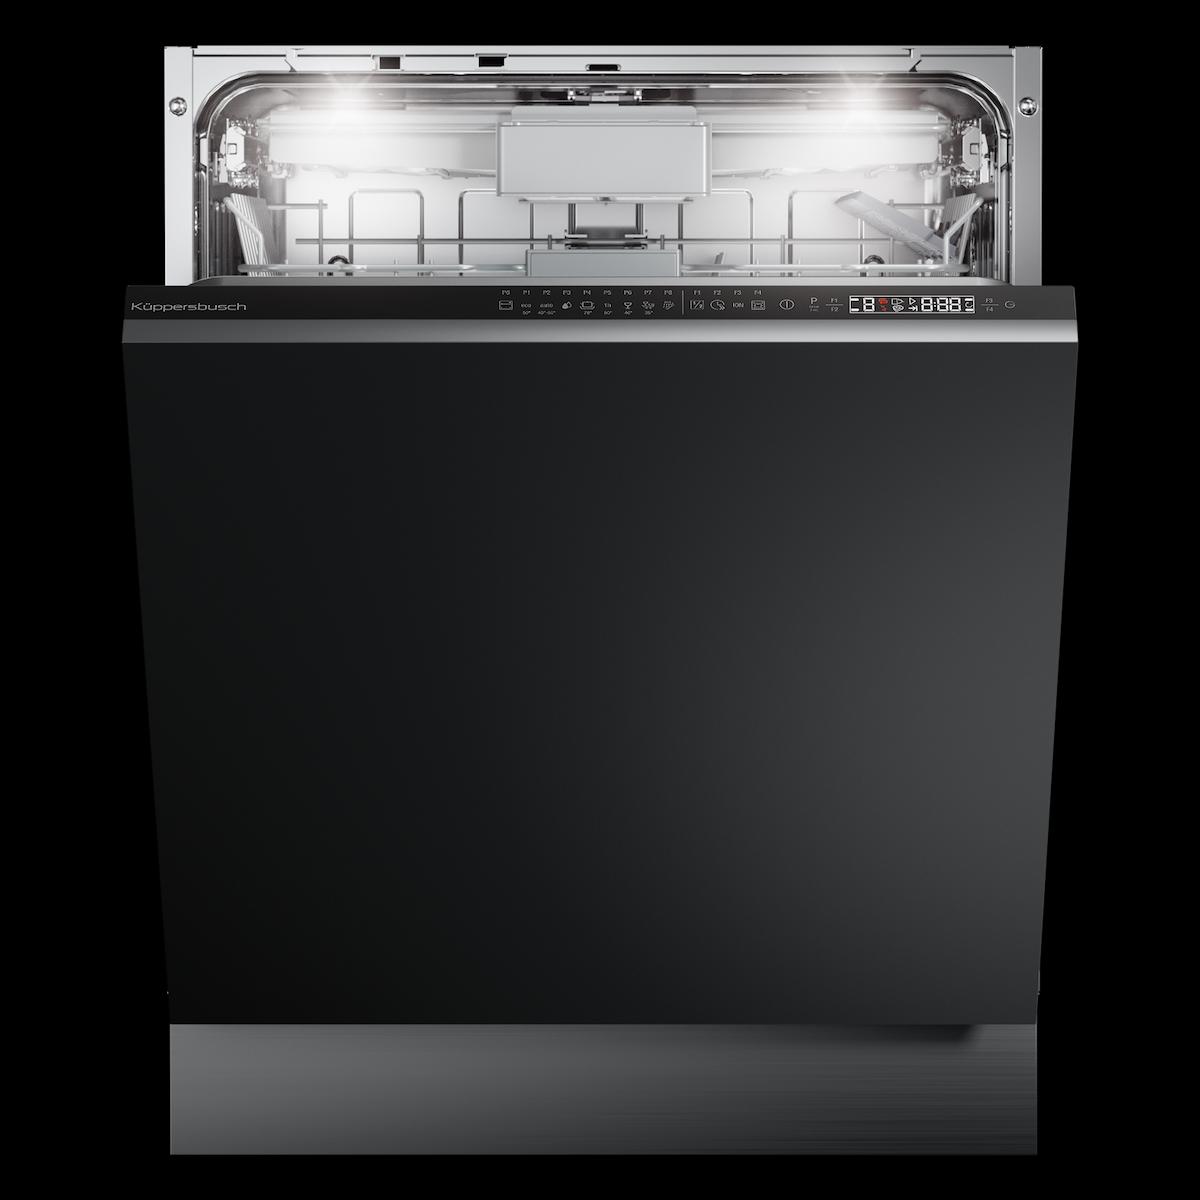 Посудомоечная машина KUPPERSBUSCH - G 6500.0 v